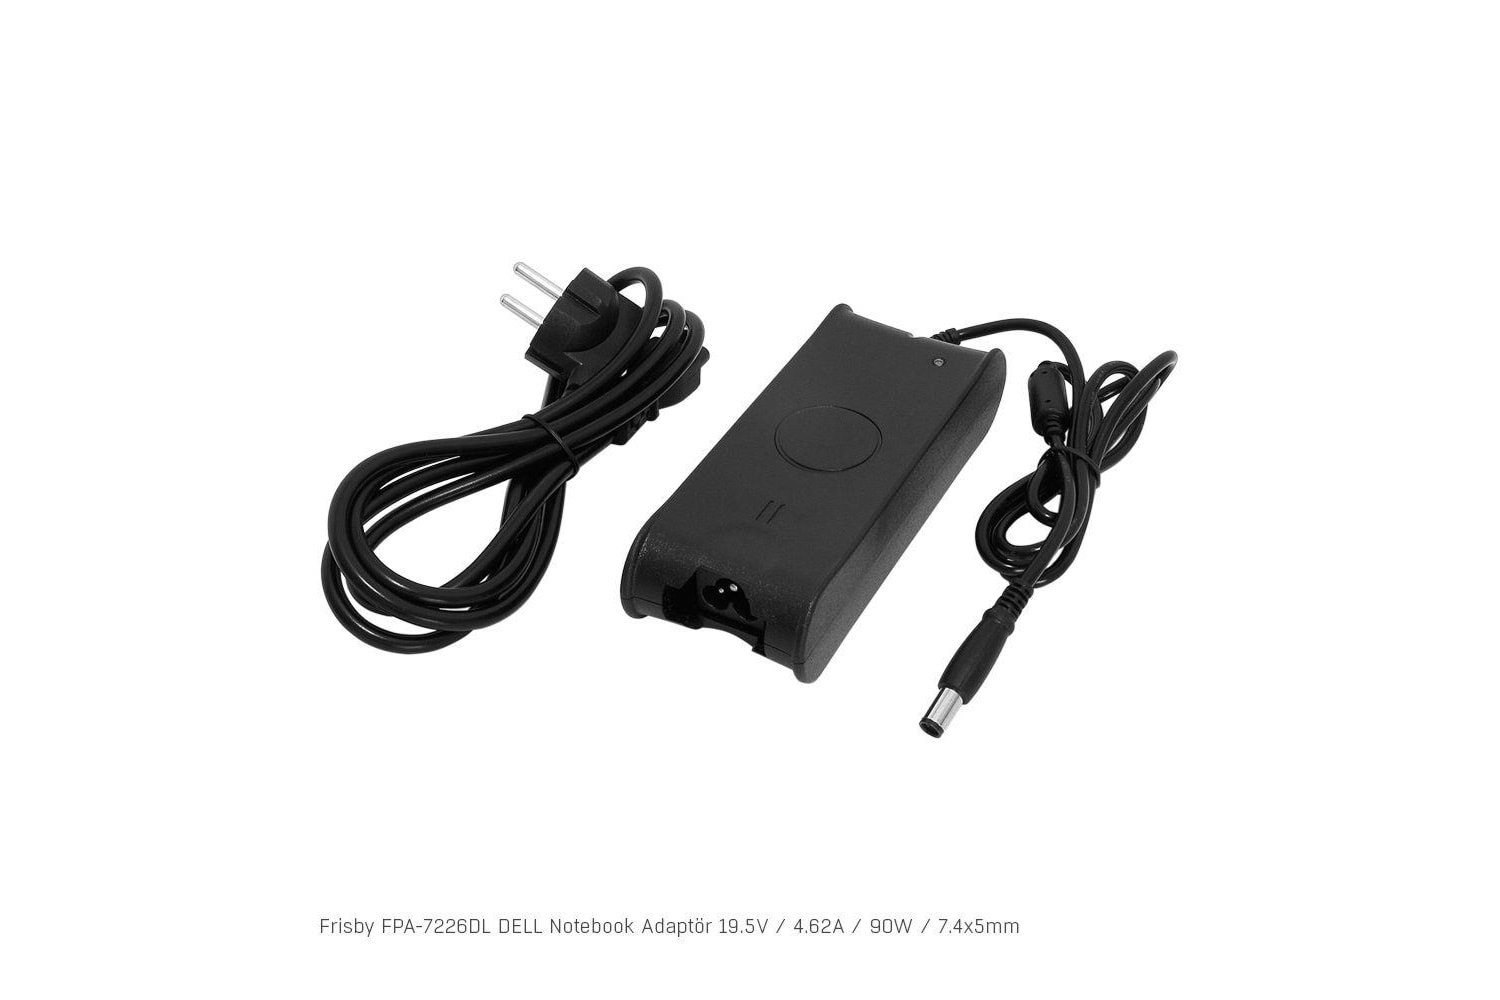 Frisby FPA-7226DL Notebook Adaptör (Dell) 19.5V 4.62A (Uç Boyutu : 7.4 x 5.0mm)